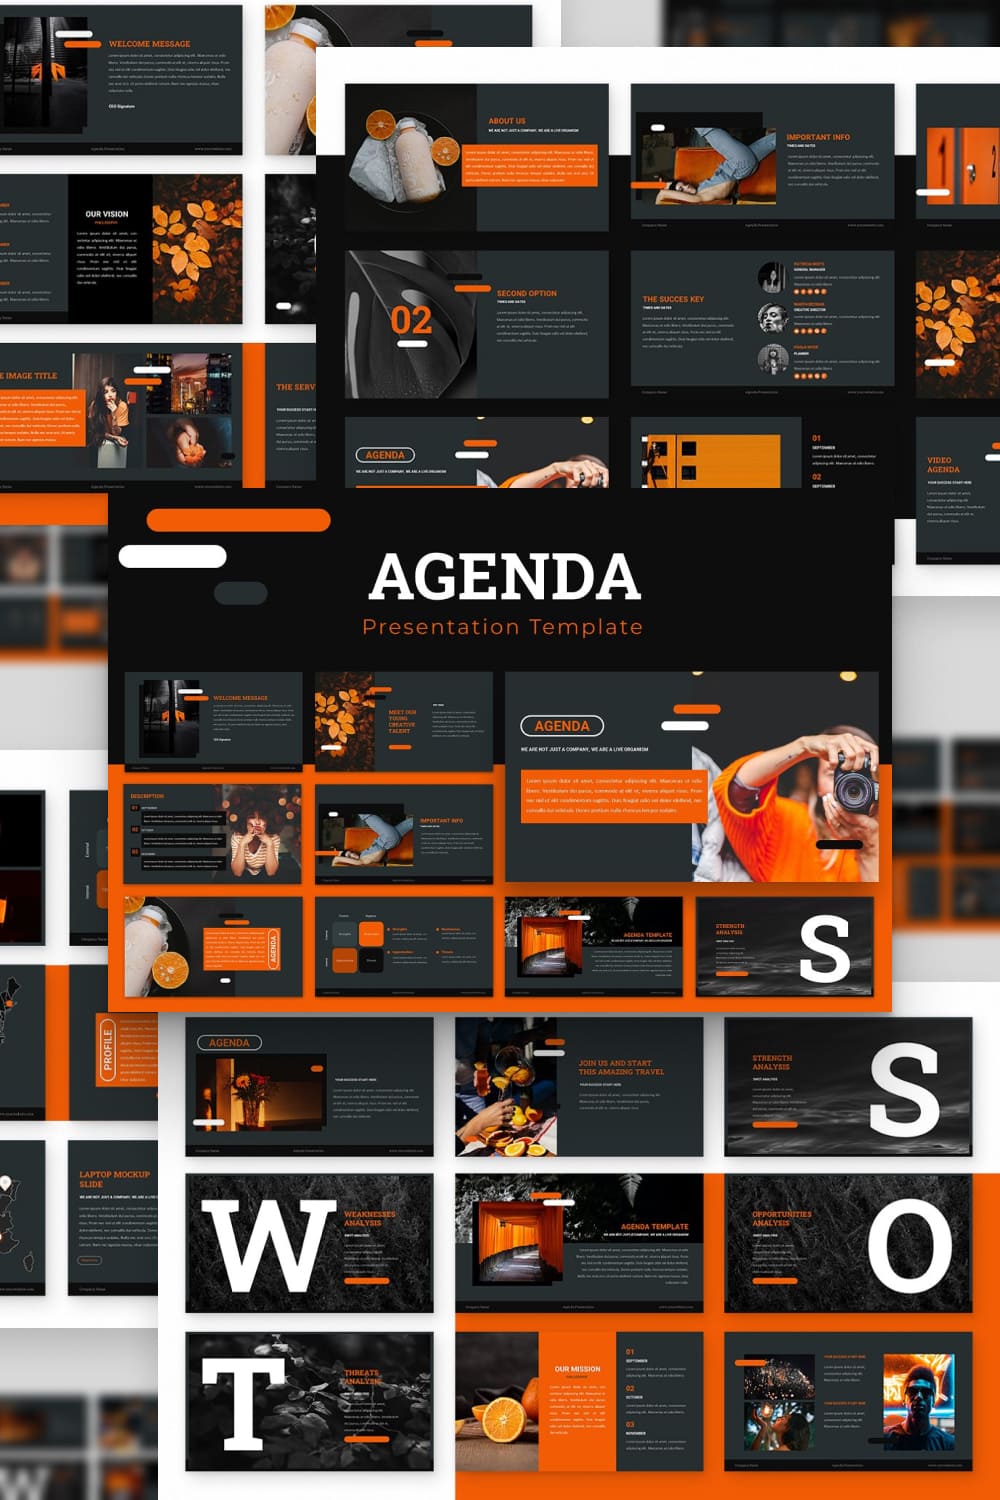 Agenda Powerpoint Presentation by MasterBundles Pinterest Collage Image.